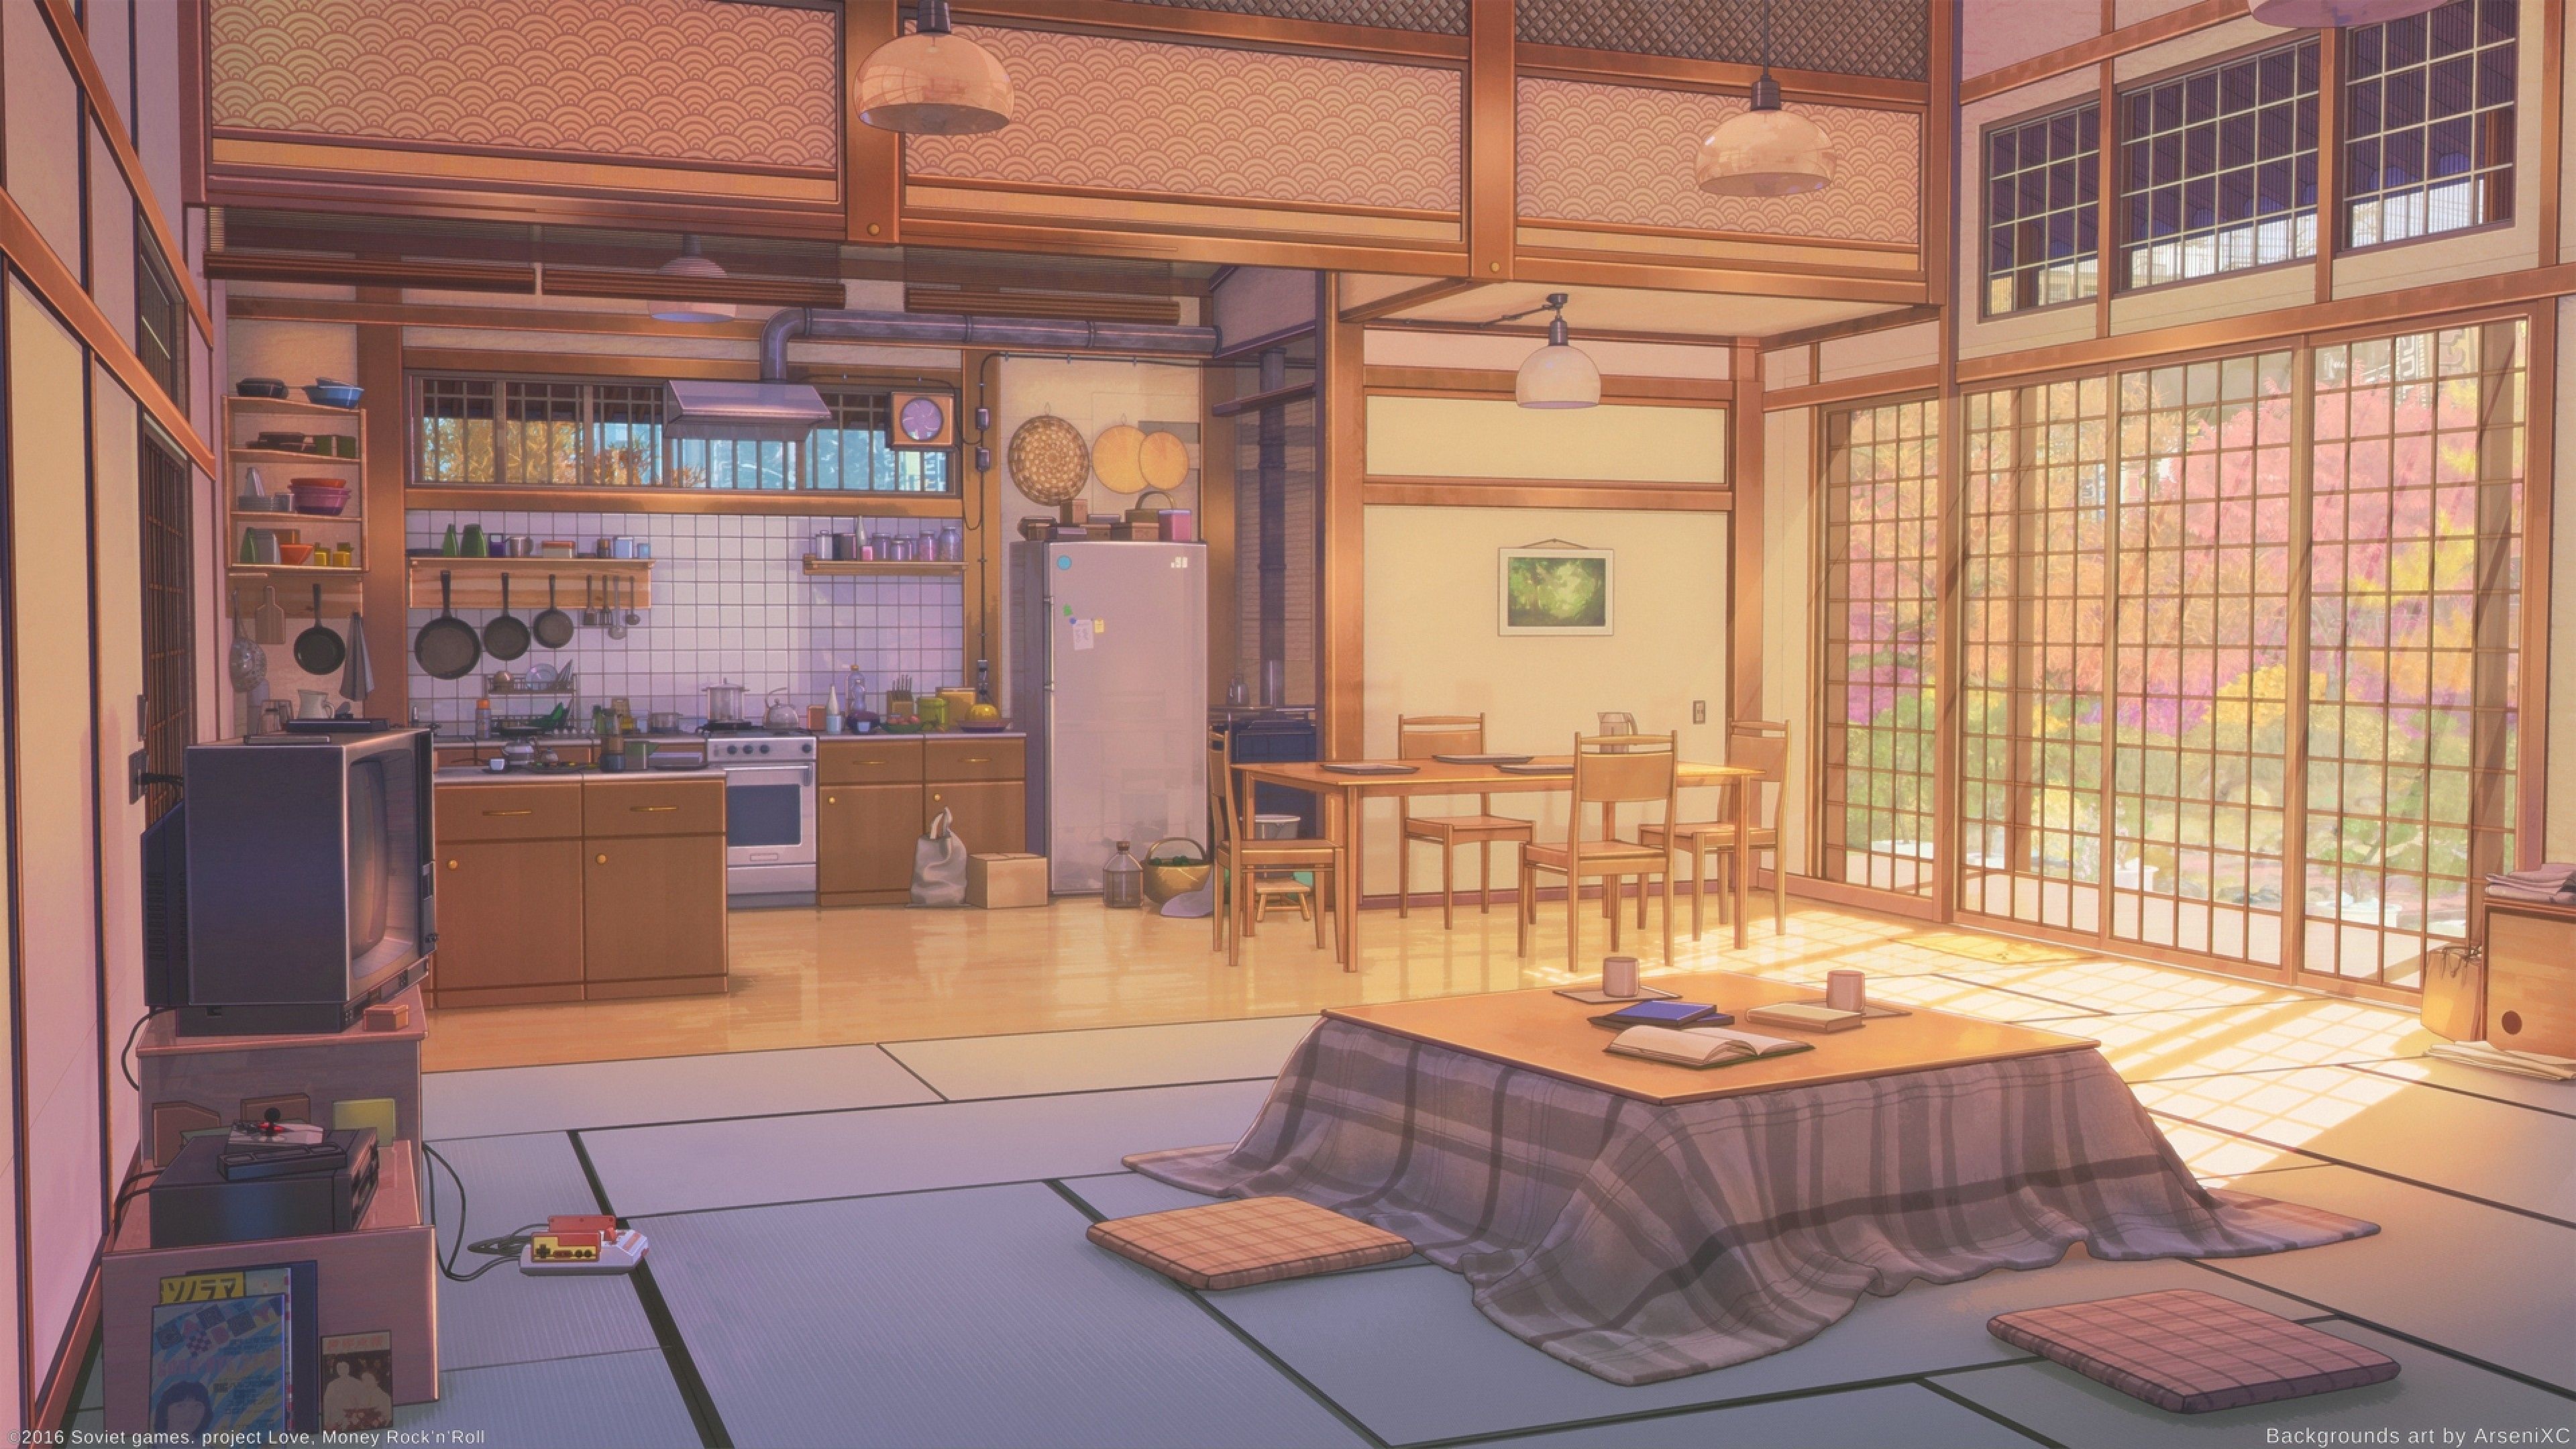 Anime Room Kitchen Inside The Building Kotatsu Scenic